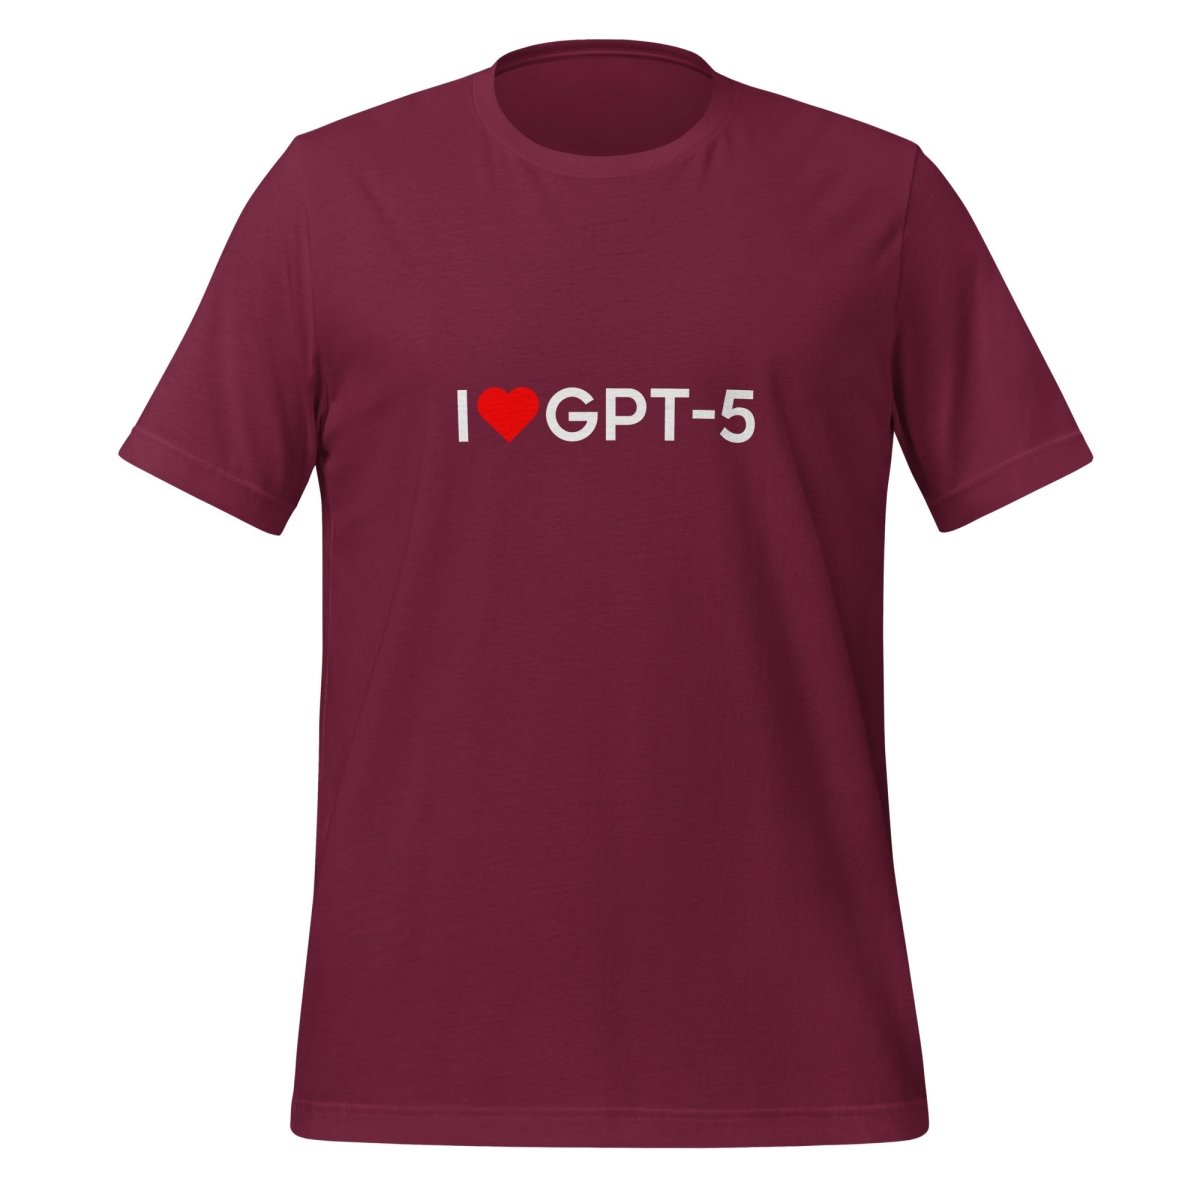 I Heart GPT - 5 T - Shirt (unisex) - Maroon - AI Store